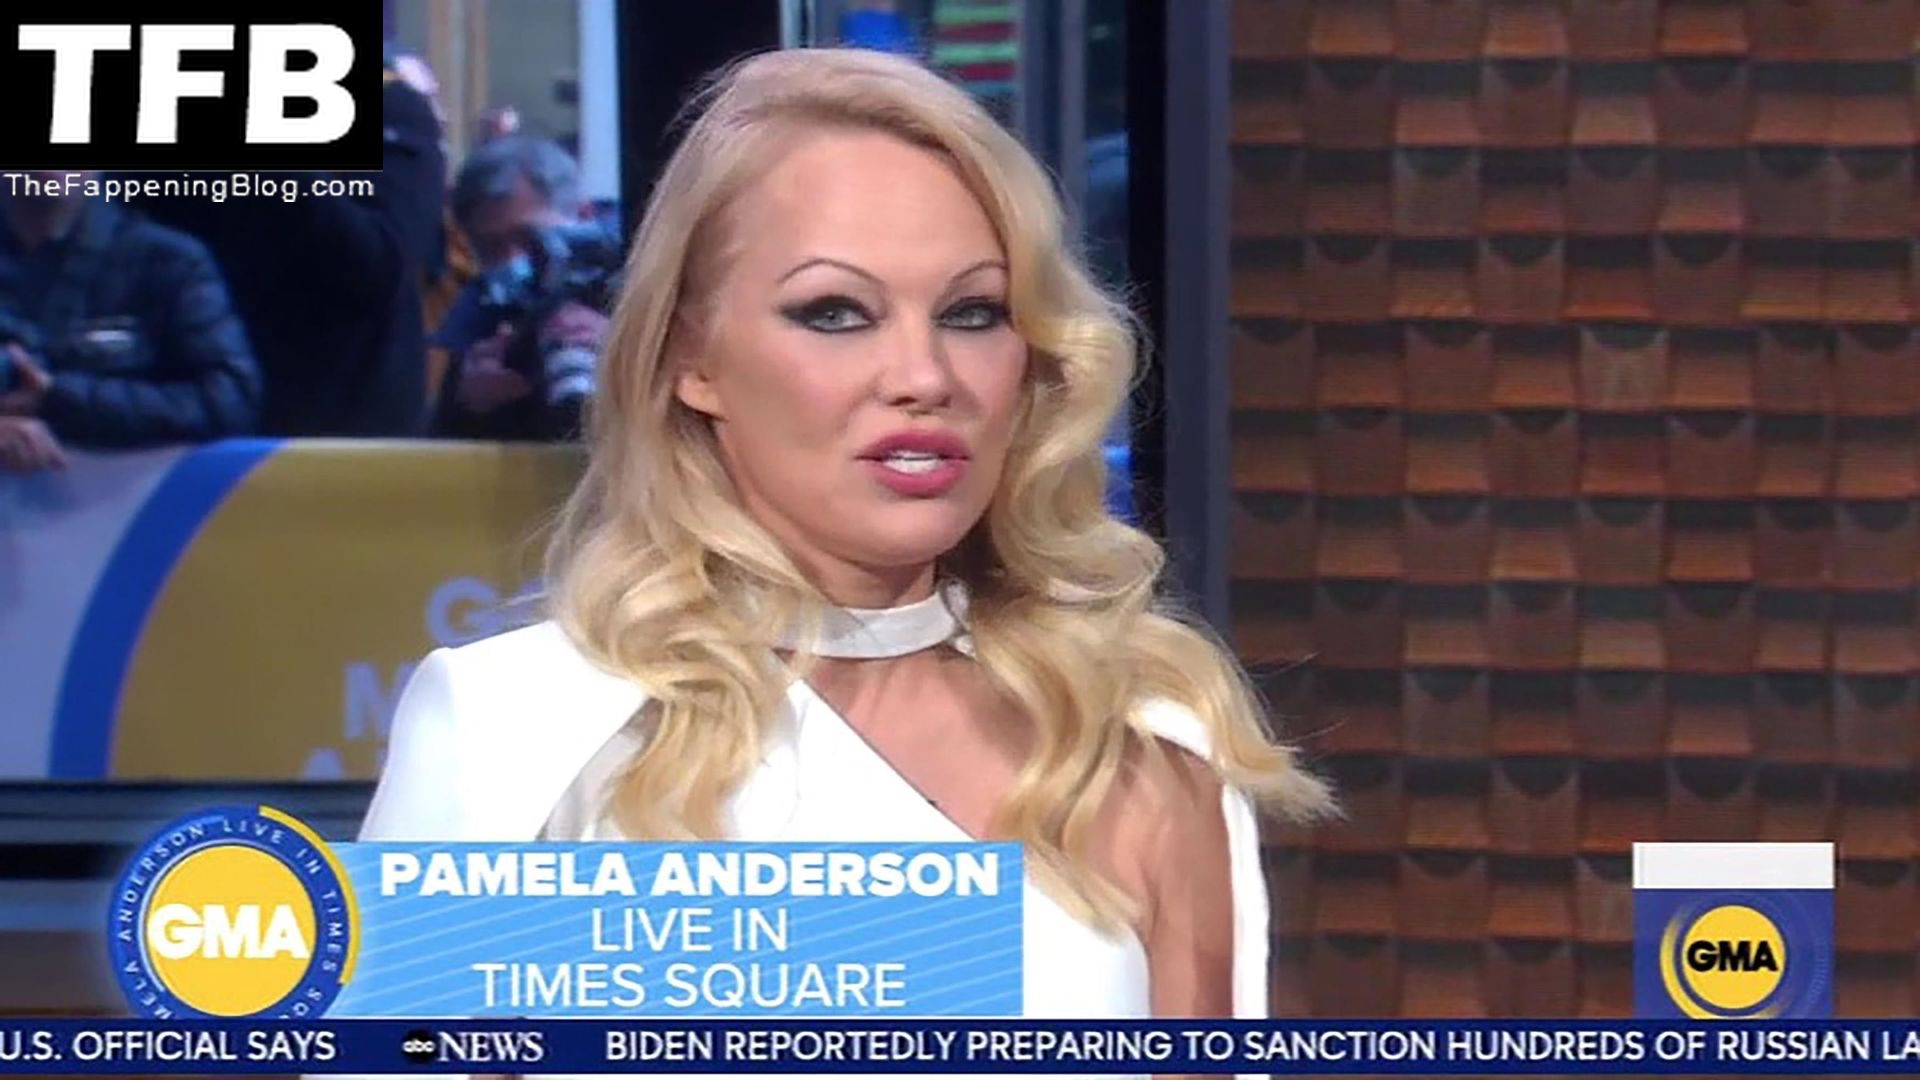 Pamela-Anderson-Hot-The-Fappening-Blog-4.jpg